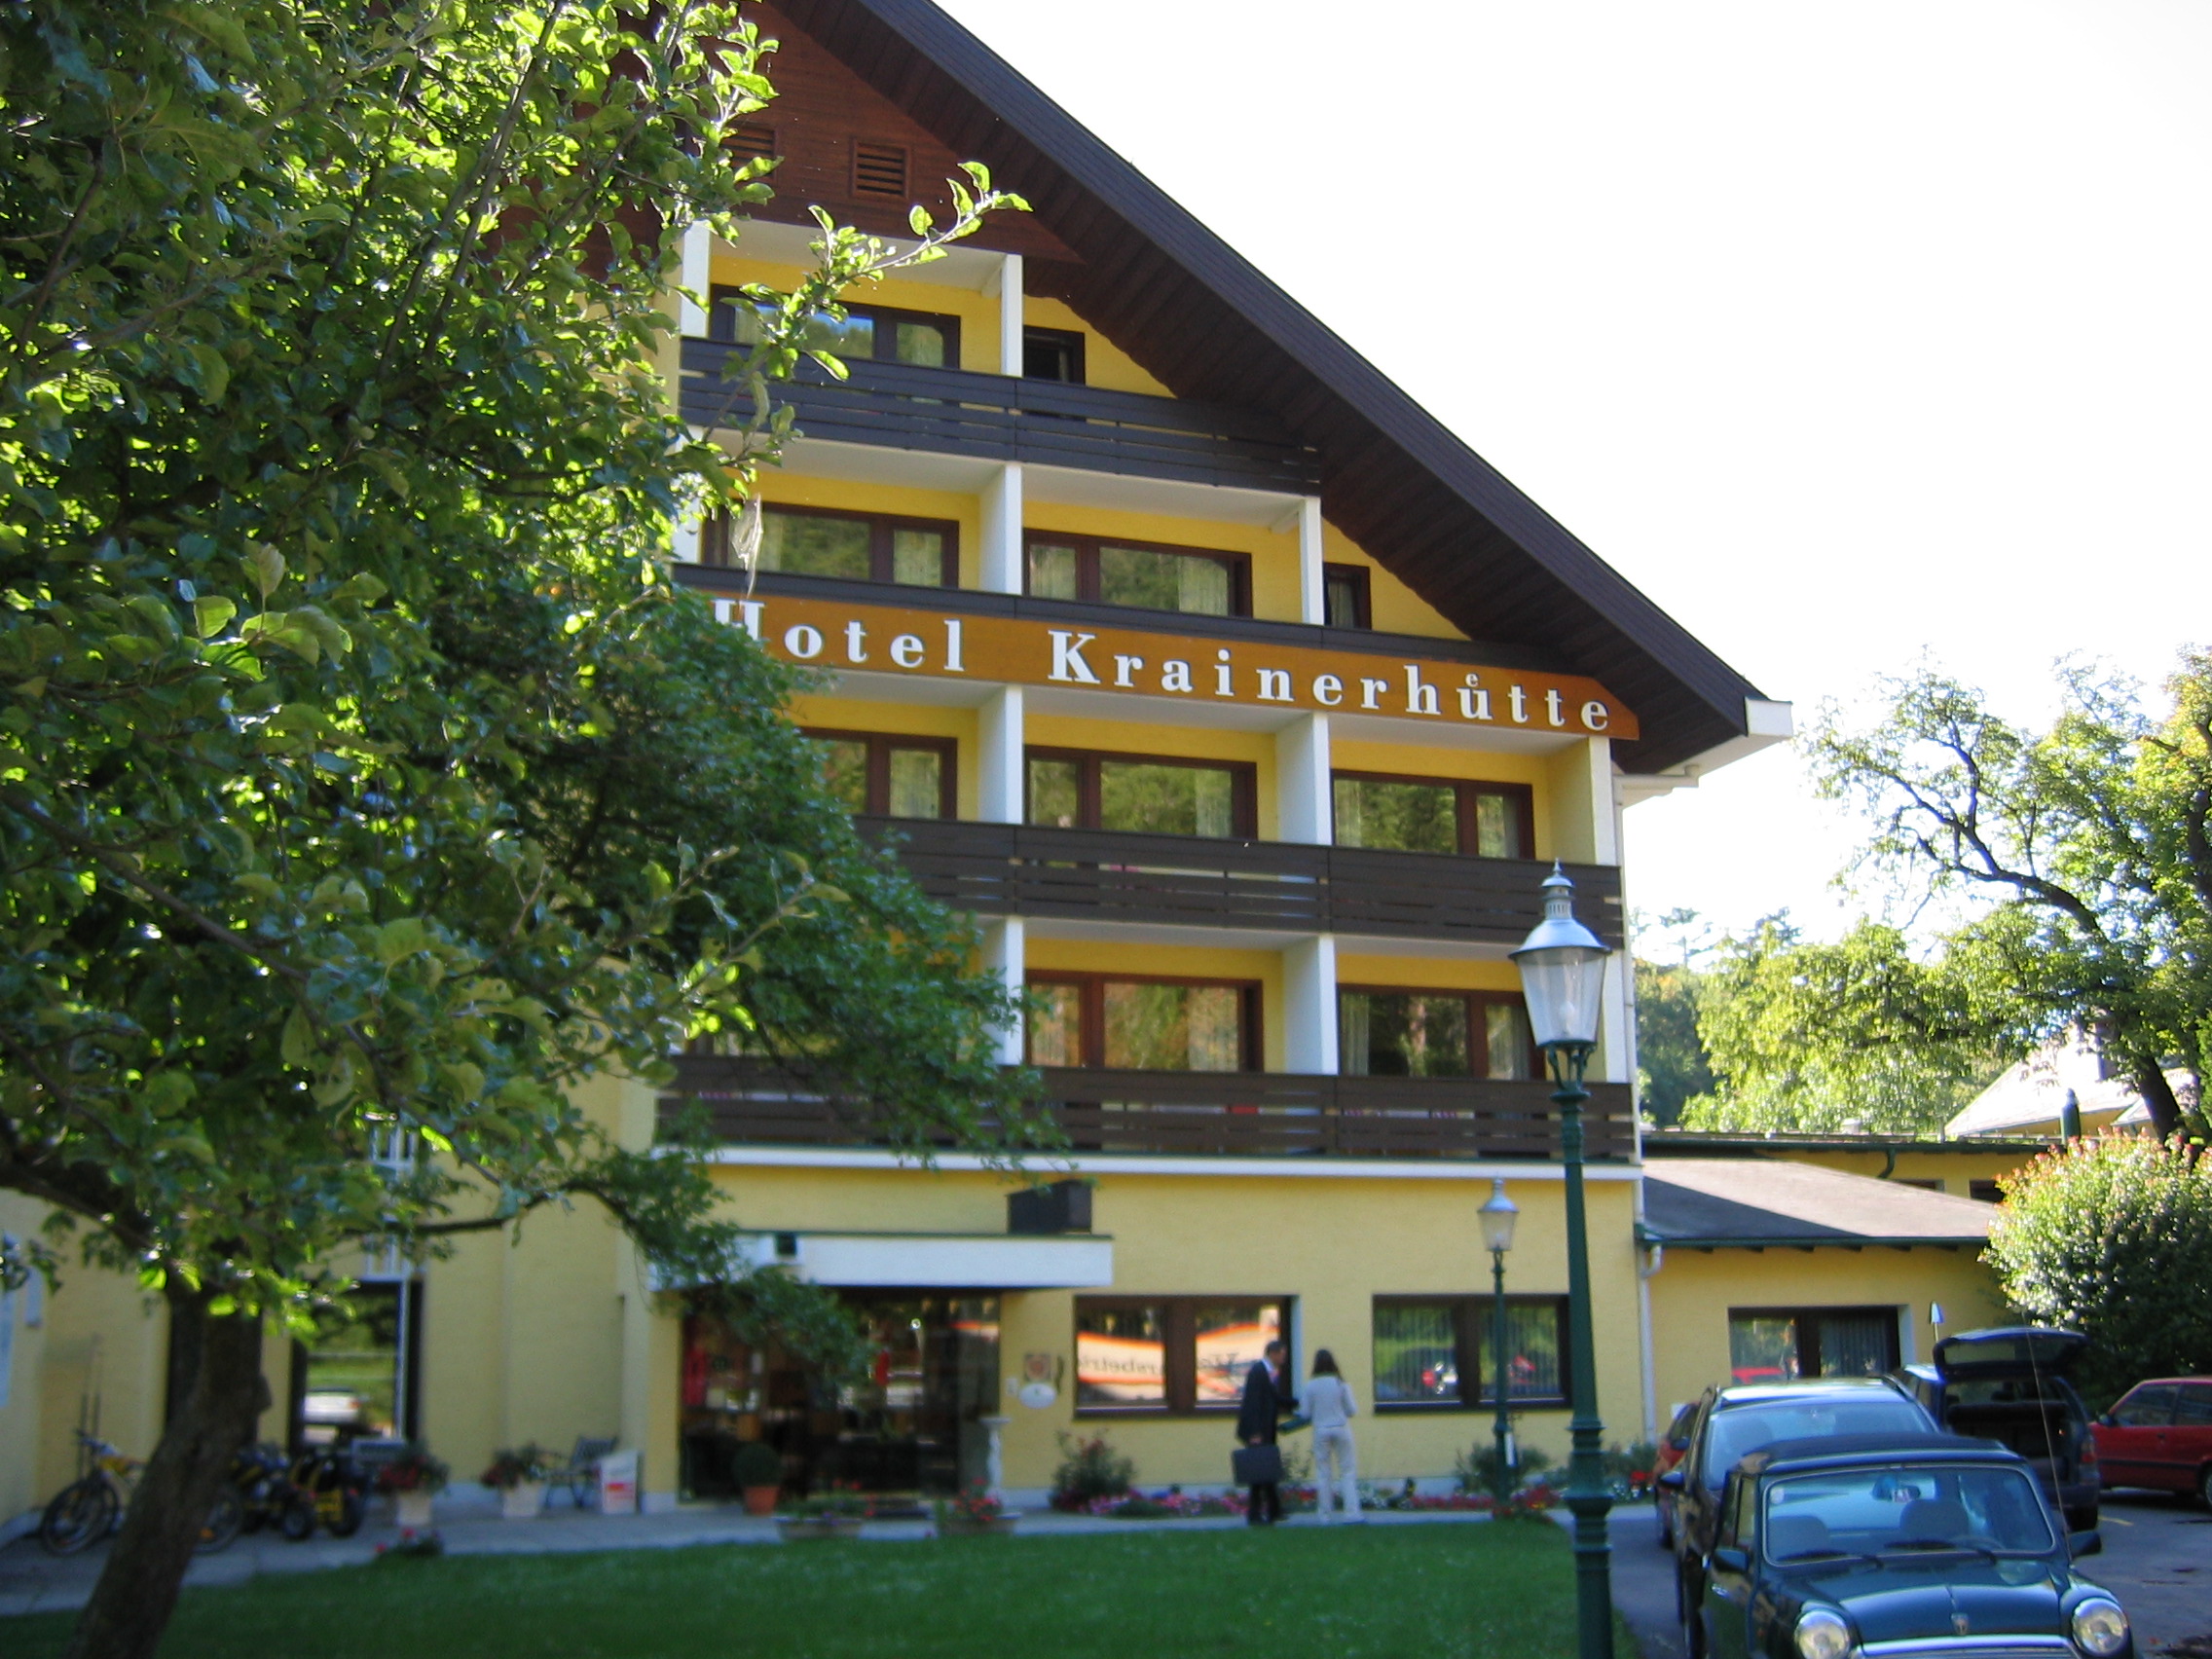 Hotel Krainerhütte Helenental (09/17/2004)